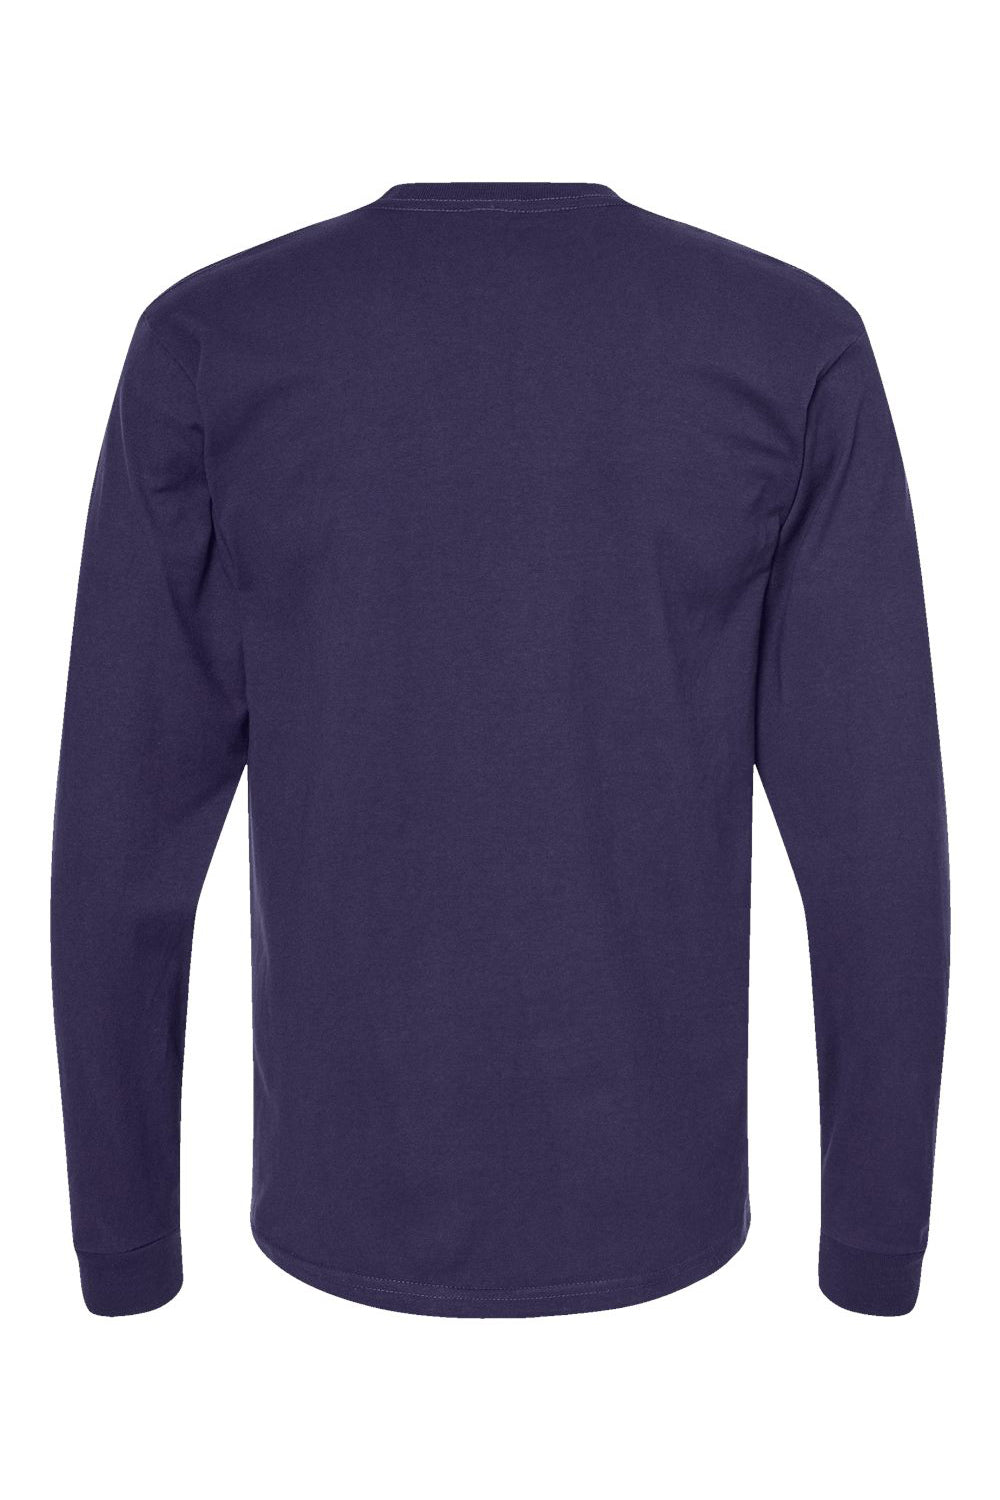 Tultex 291 Mens Jersey Long Sleeve Crewneck T-Shirt Inked India Blue Flat Back